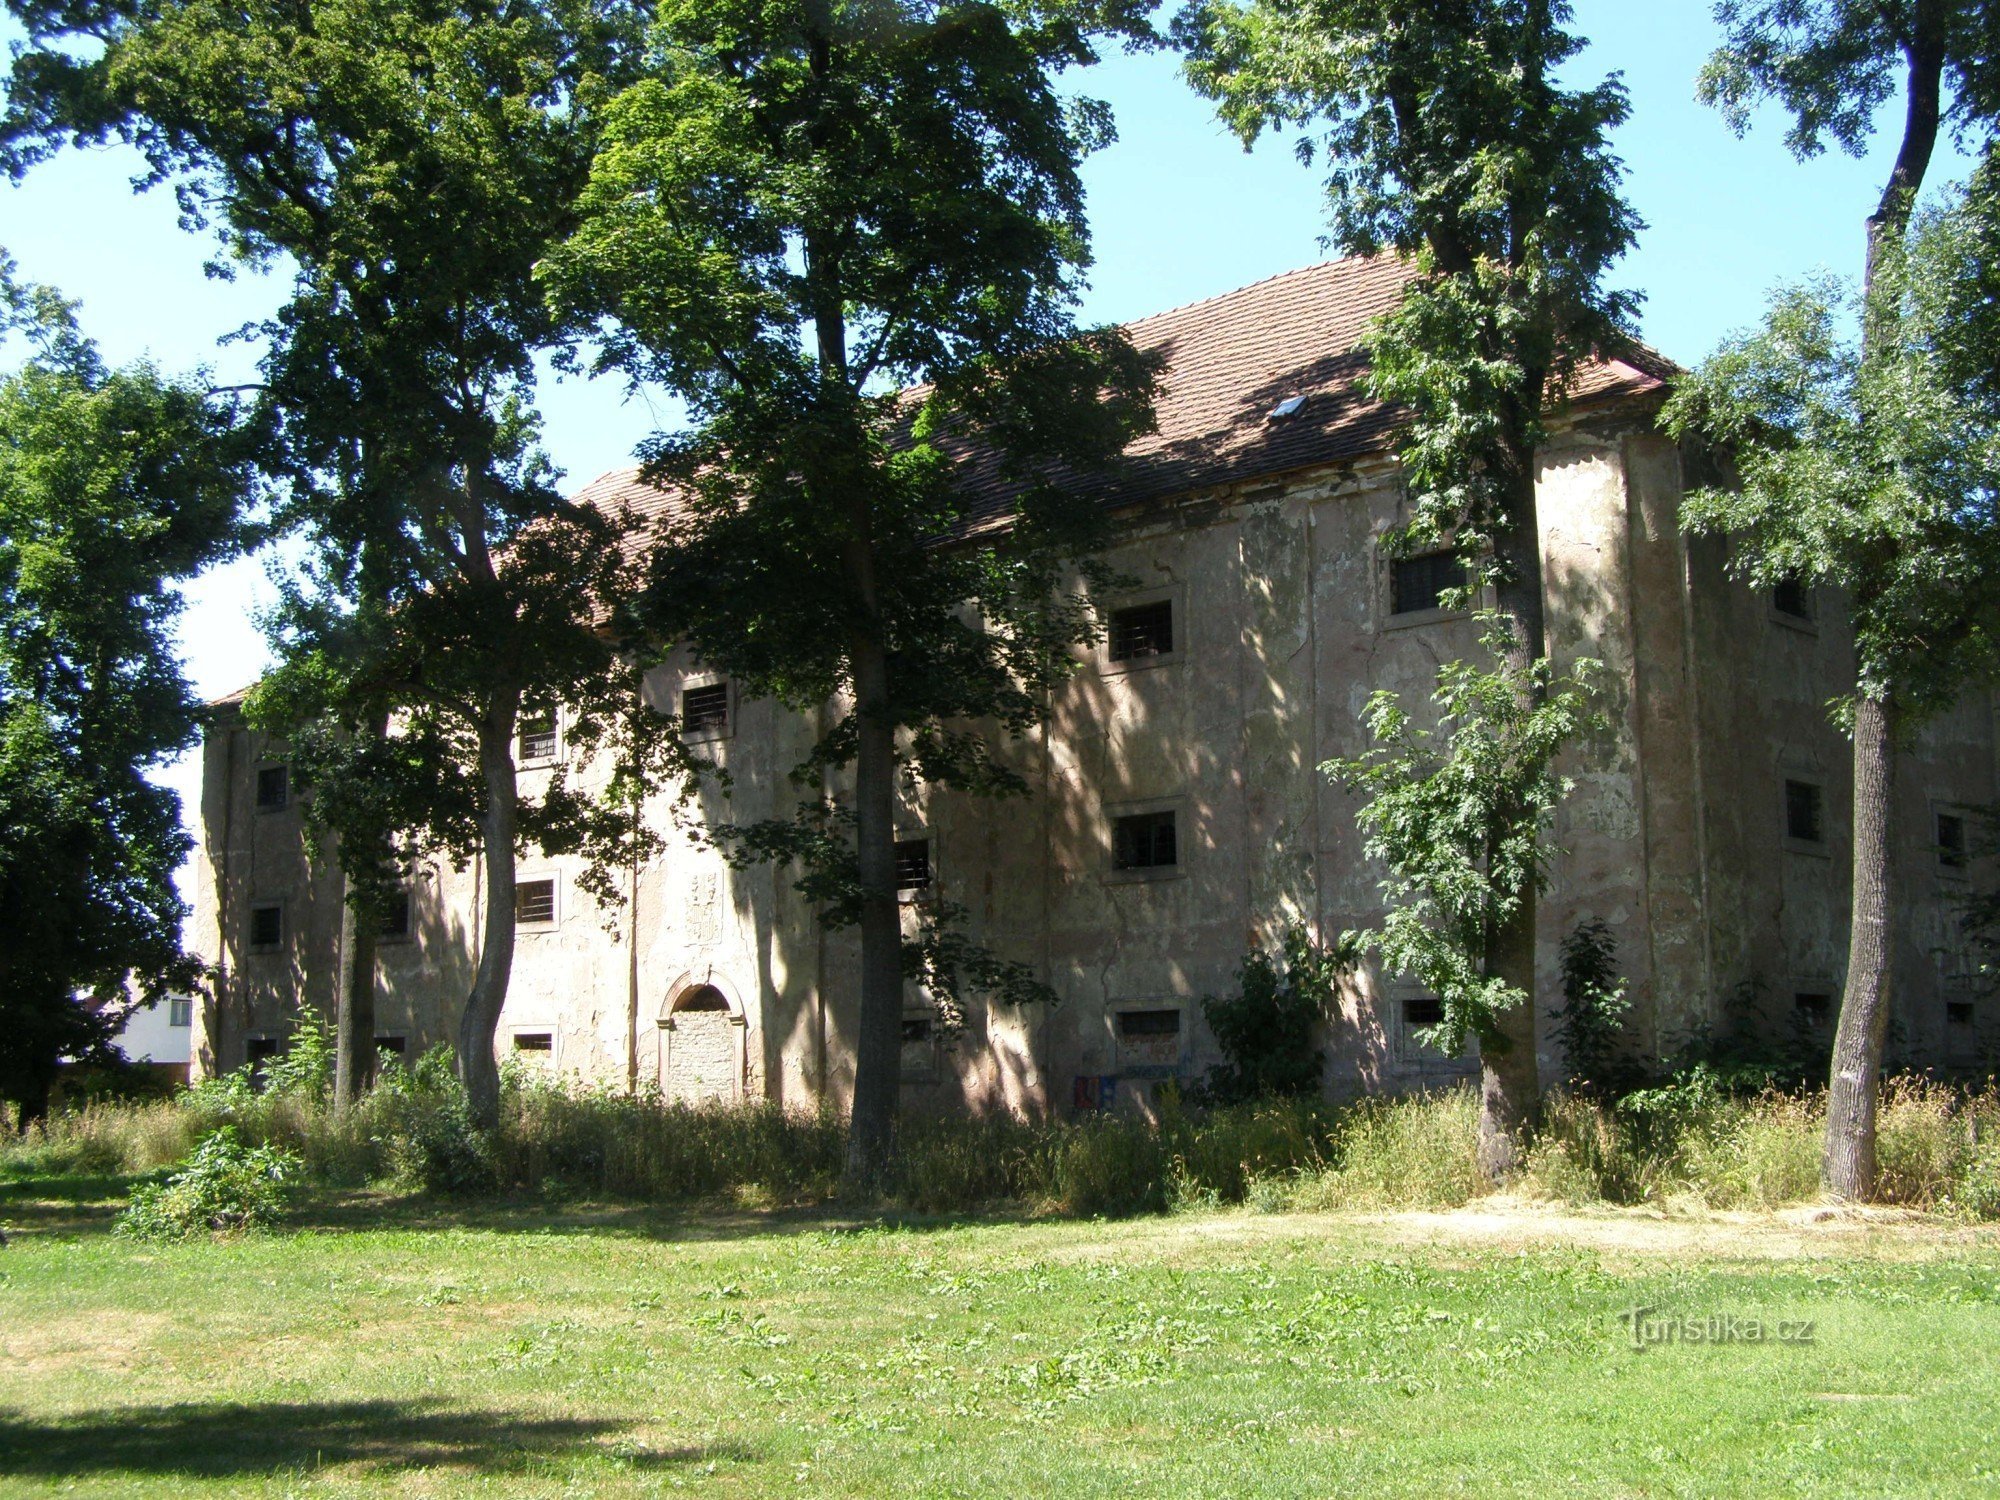 Bělohrad spa - castle granary